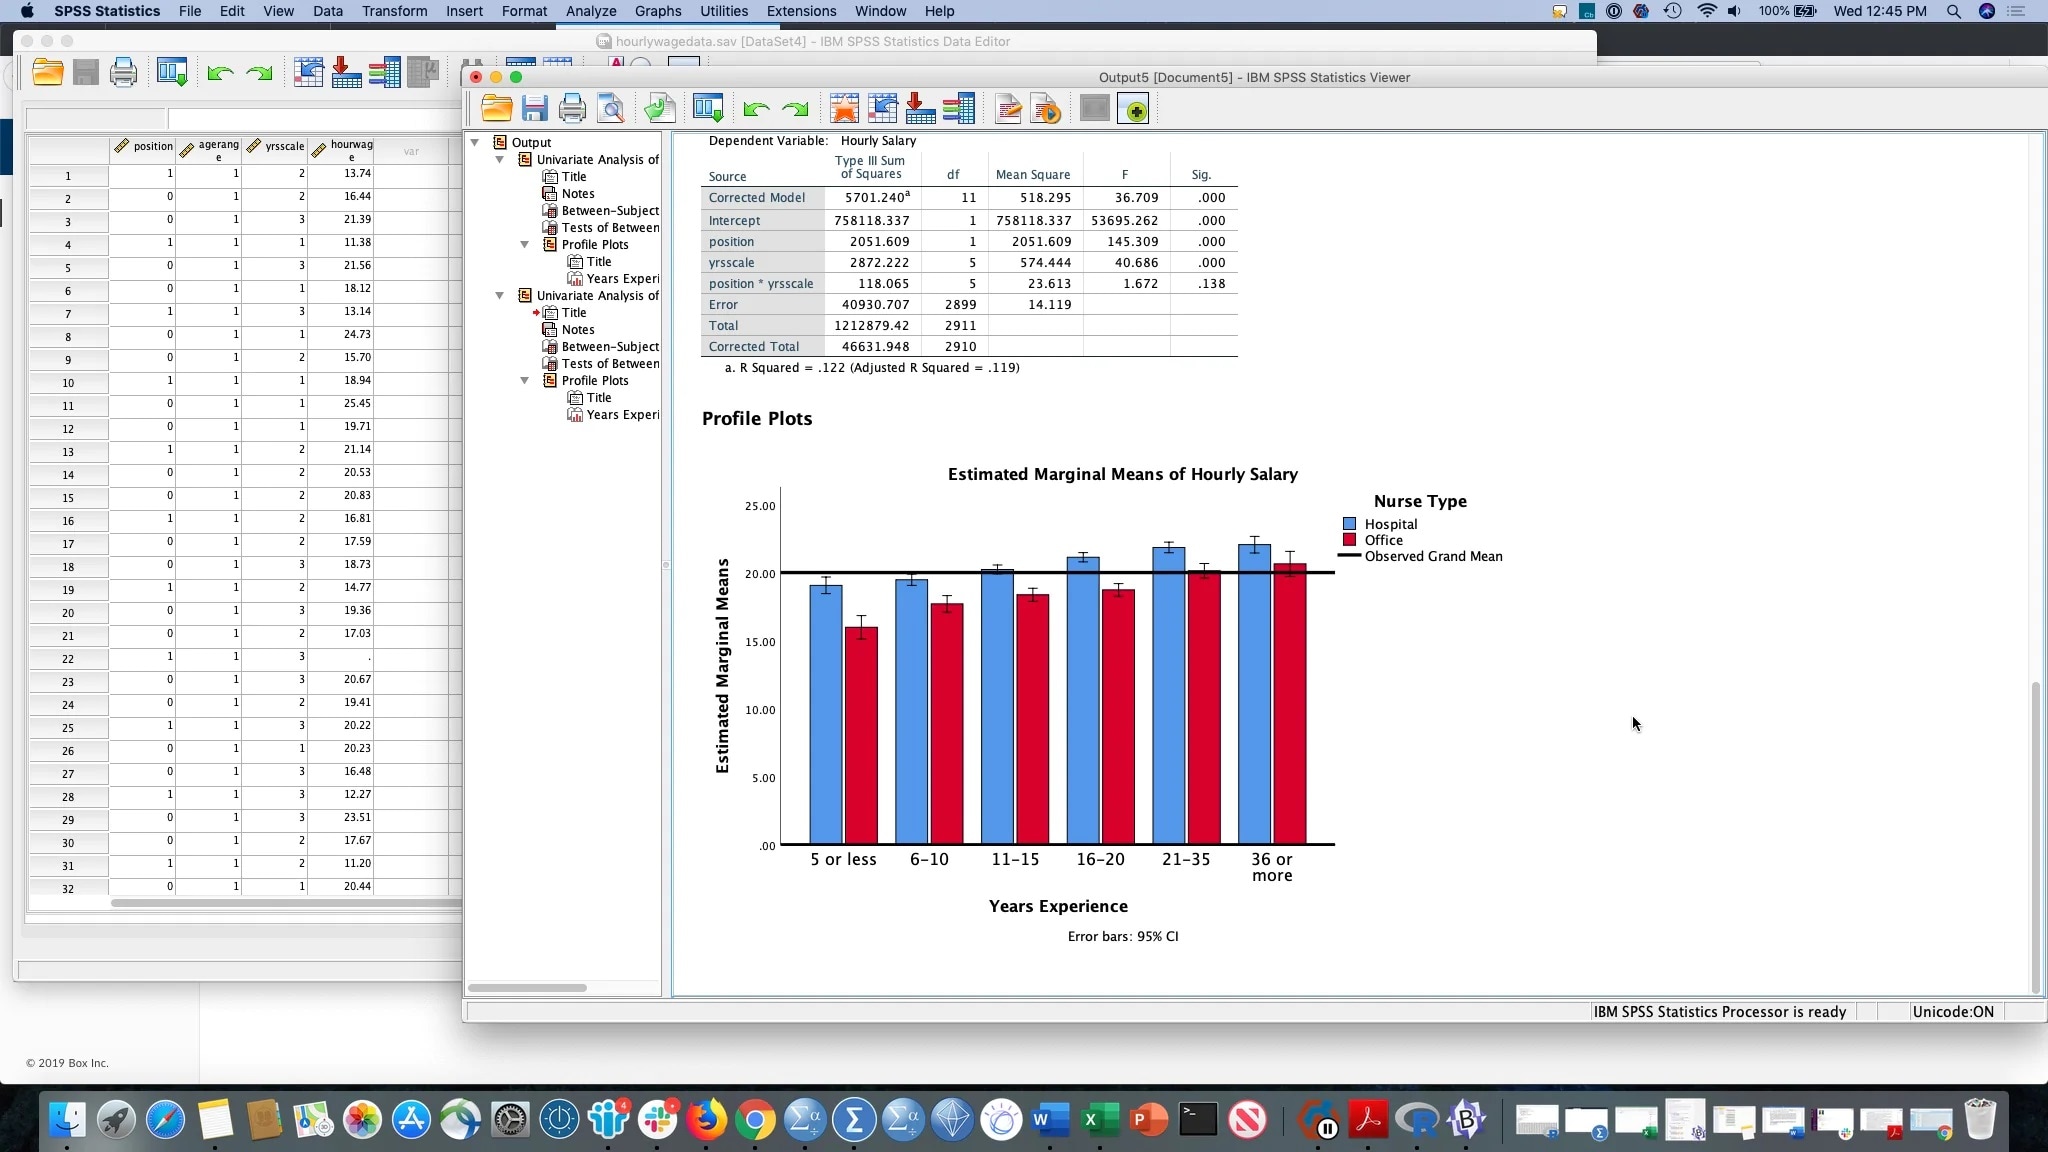 screenshot showing estimated marginal means